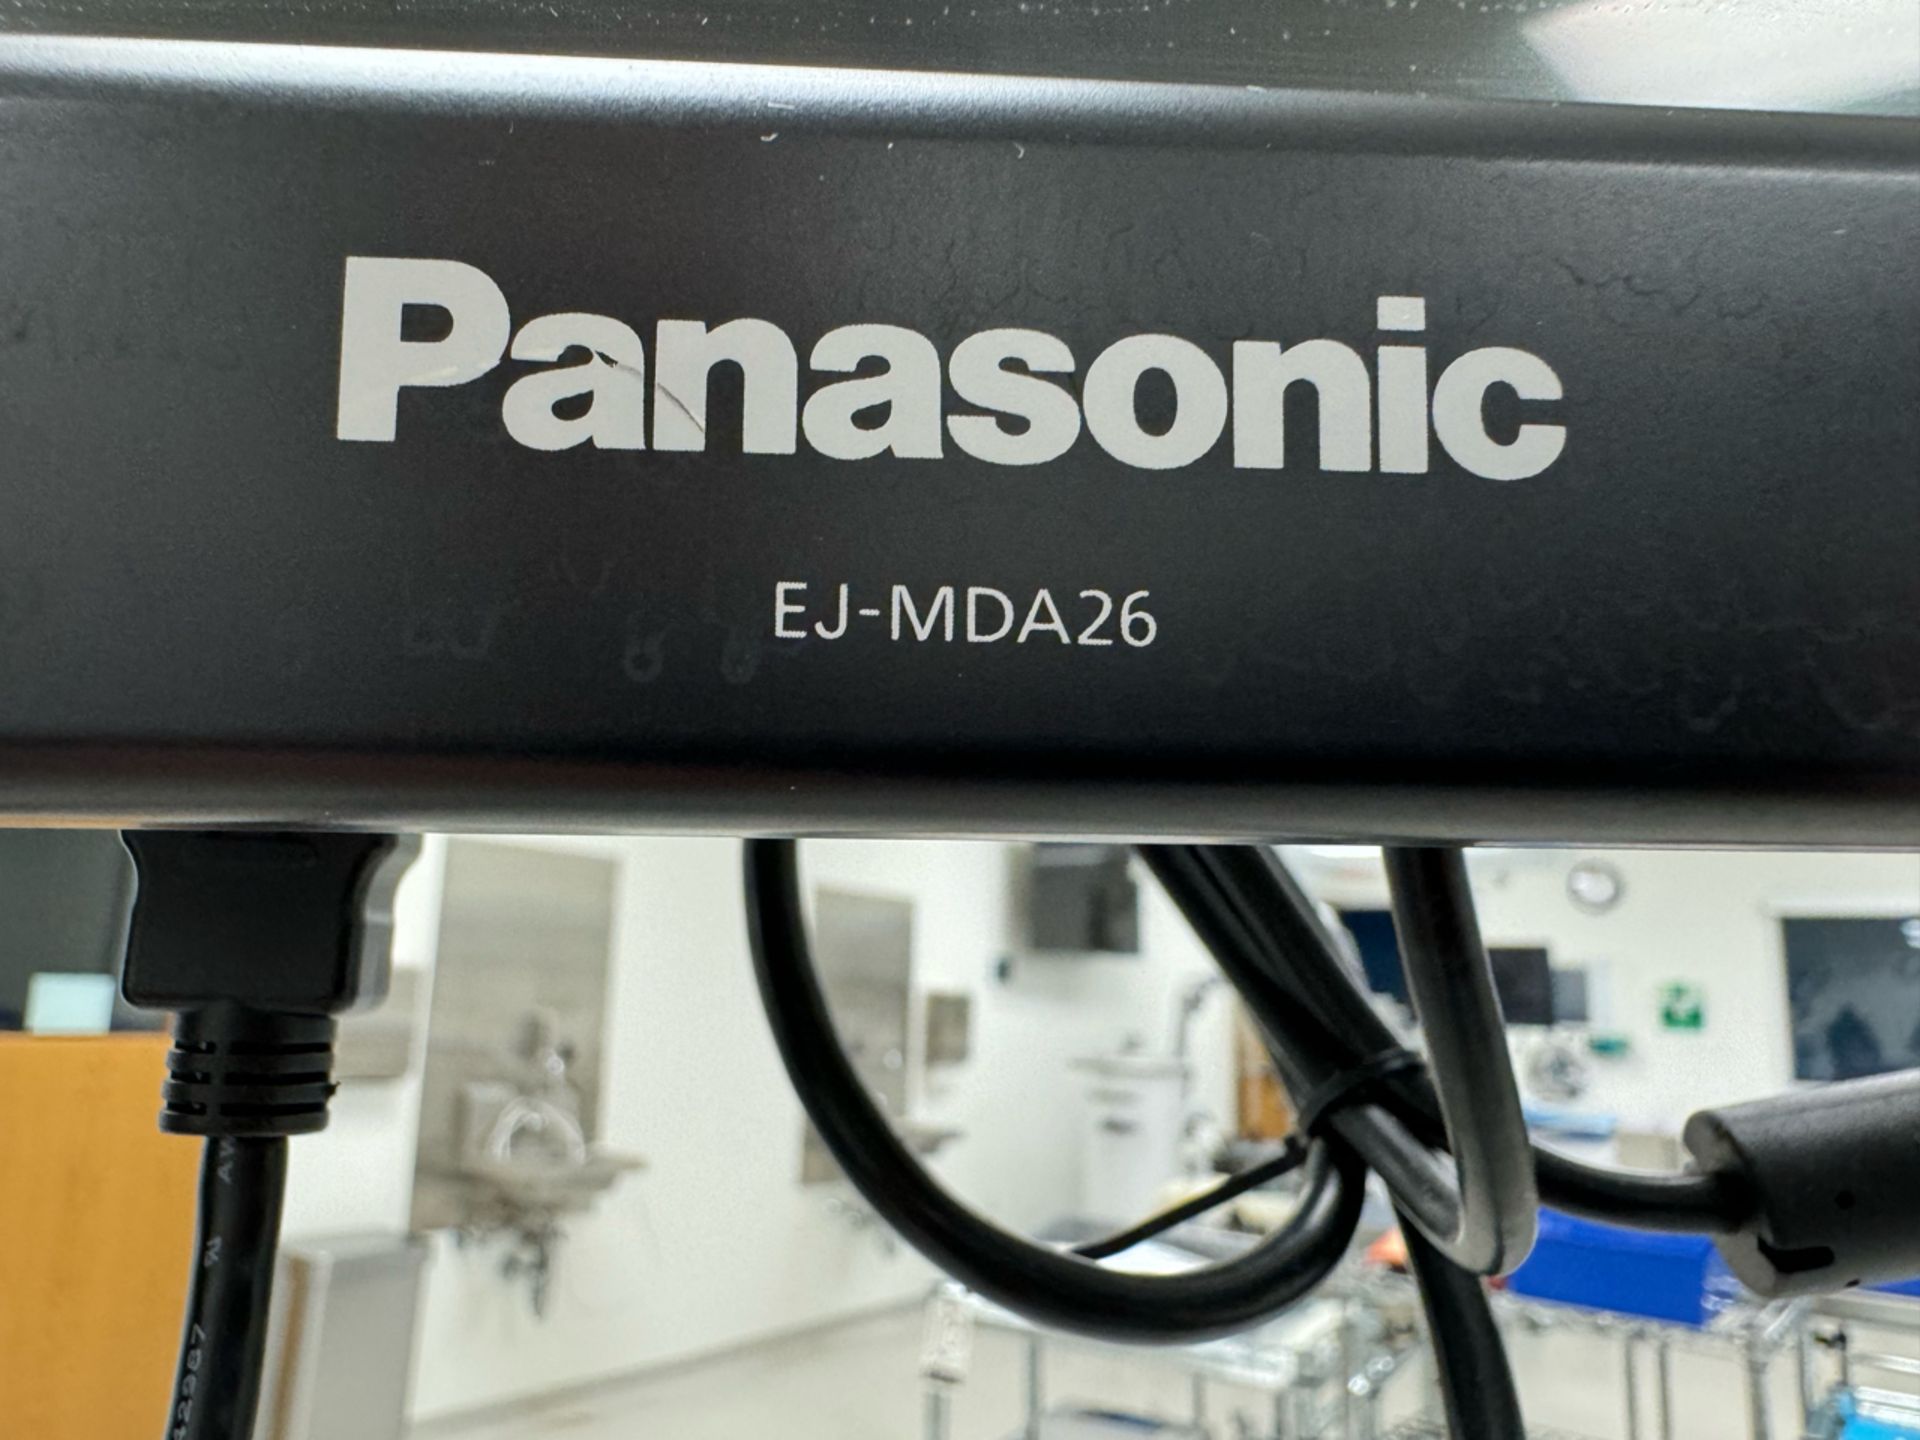 Panasonic 3D Medical Monitor w/ Mount - Image 2 of 6